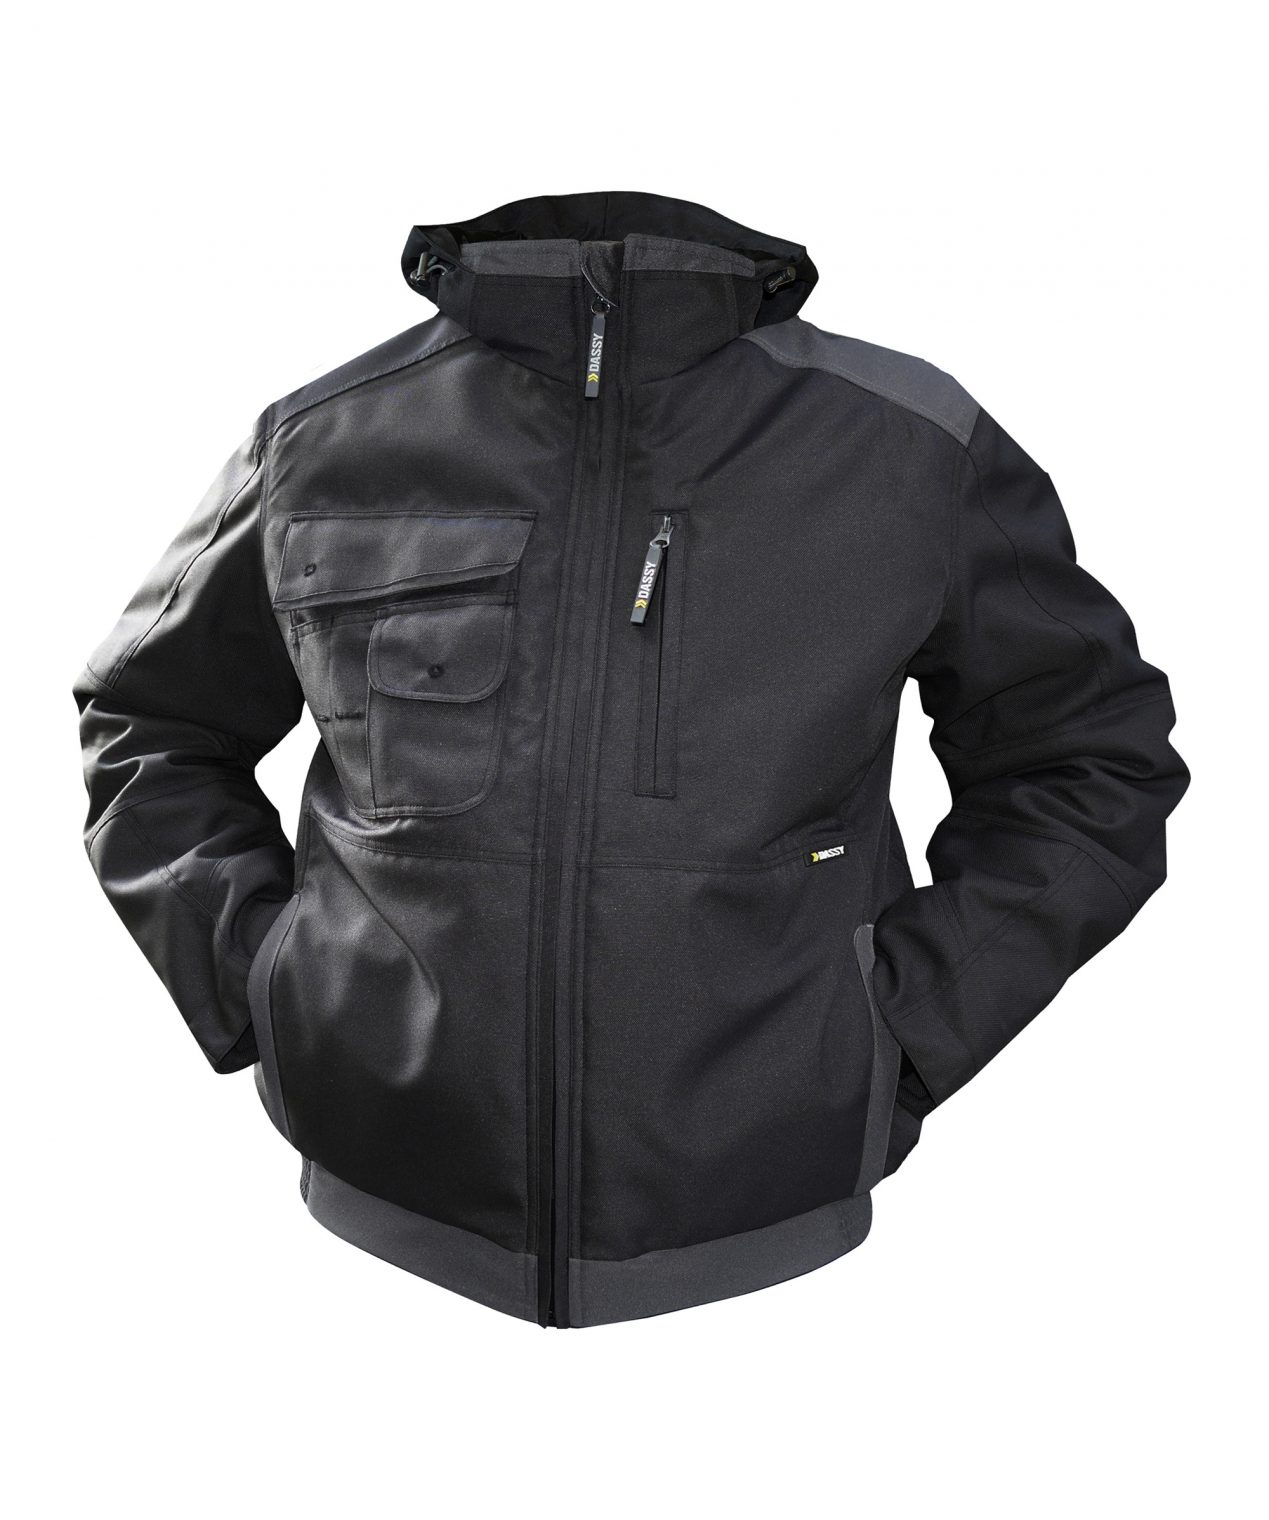 austin canvas winter jacket black anthracite grey front